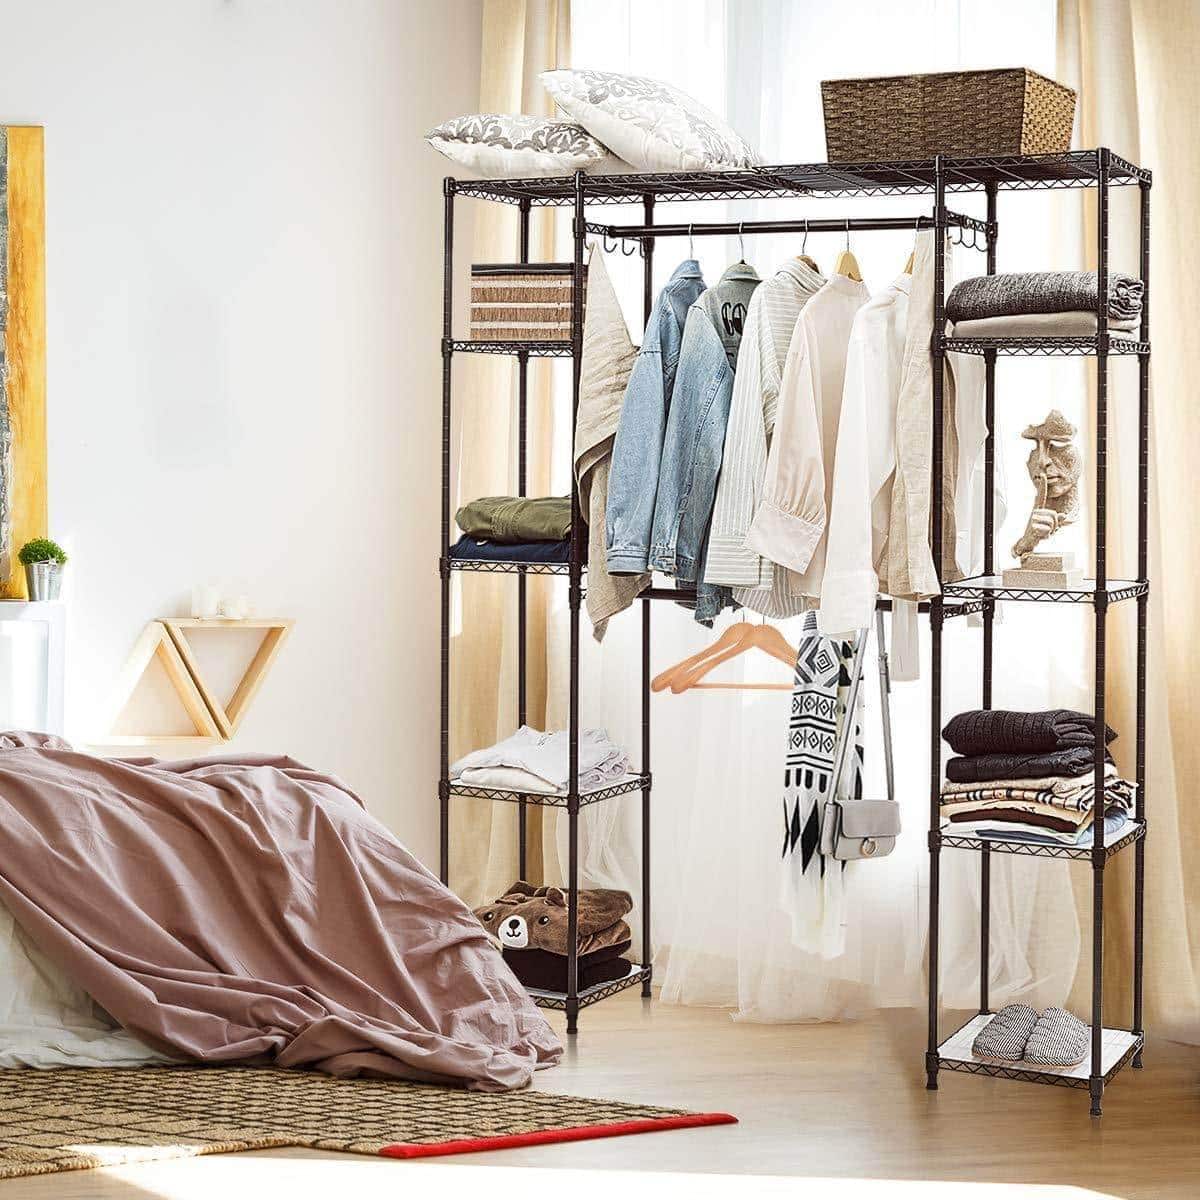 Organize with tangkula garment rack portable adjustable expandable closet storage organizer system home bedroom closet shelves clothes wardrobe coffee